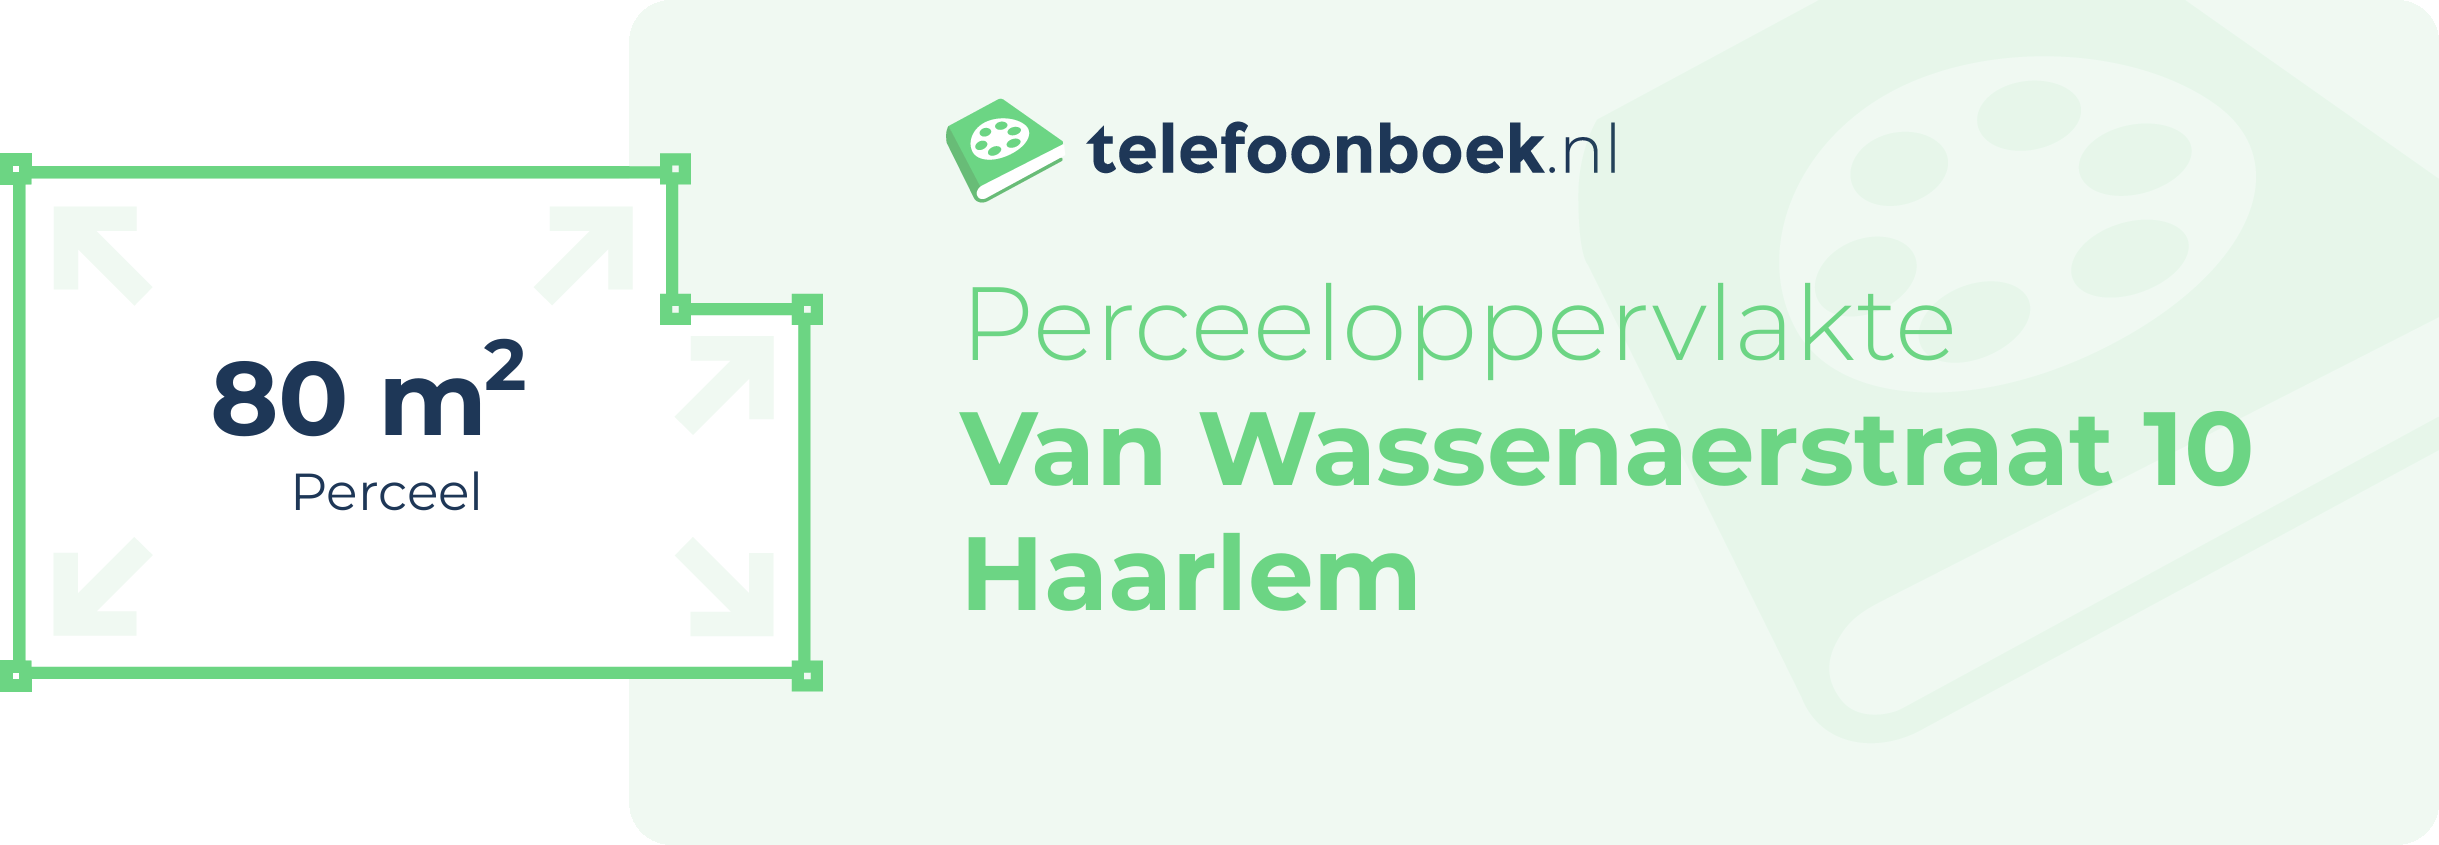 Perceeloppervlakte Van Wassenaerstraat 10 Haarlem